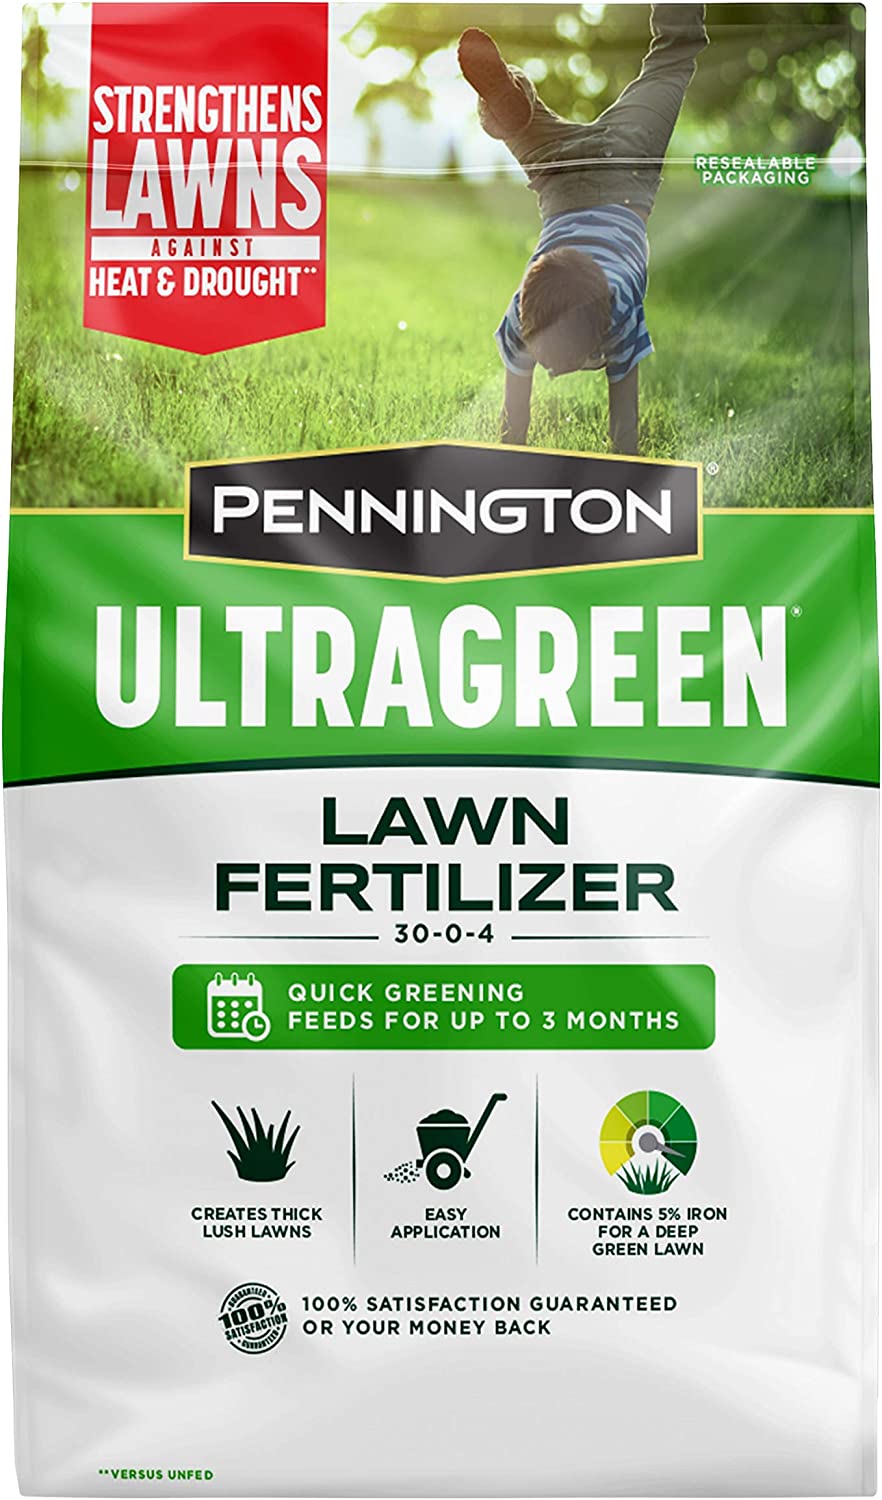 Pennington 100536576 UltraGreen Lawn Fertilizer